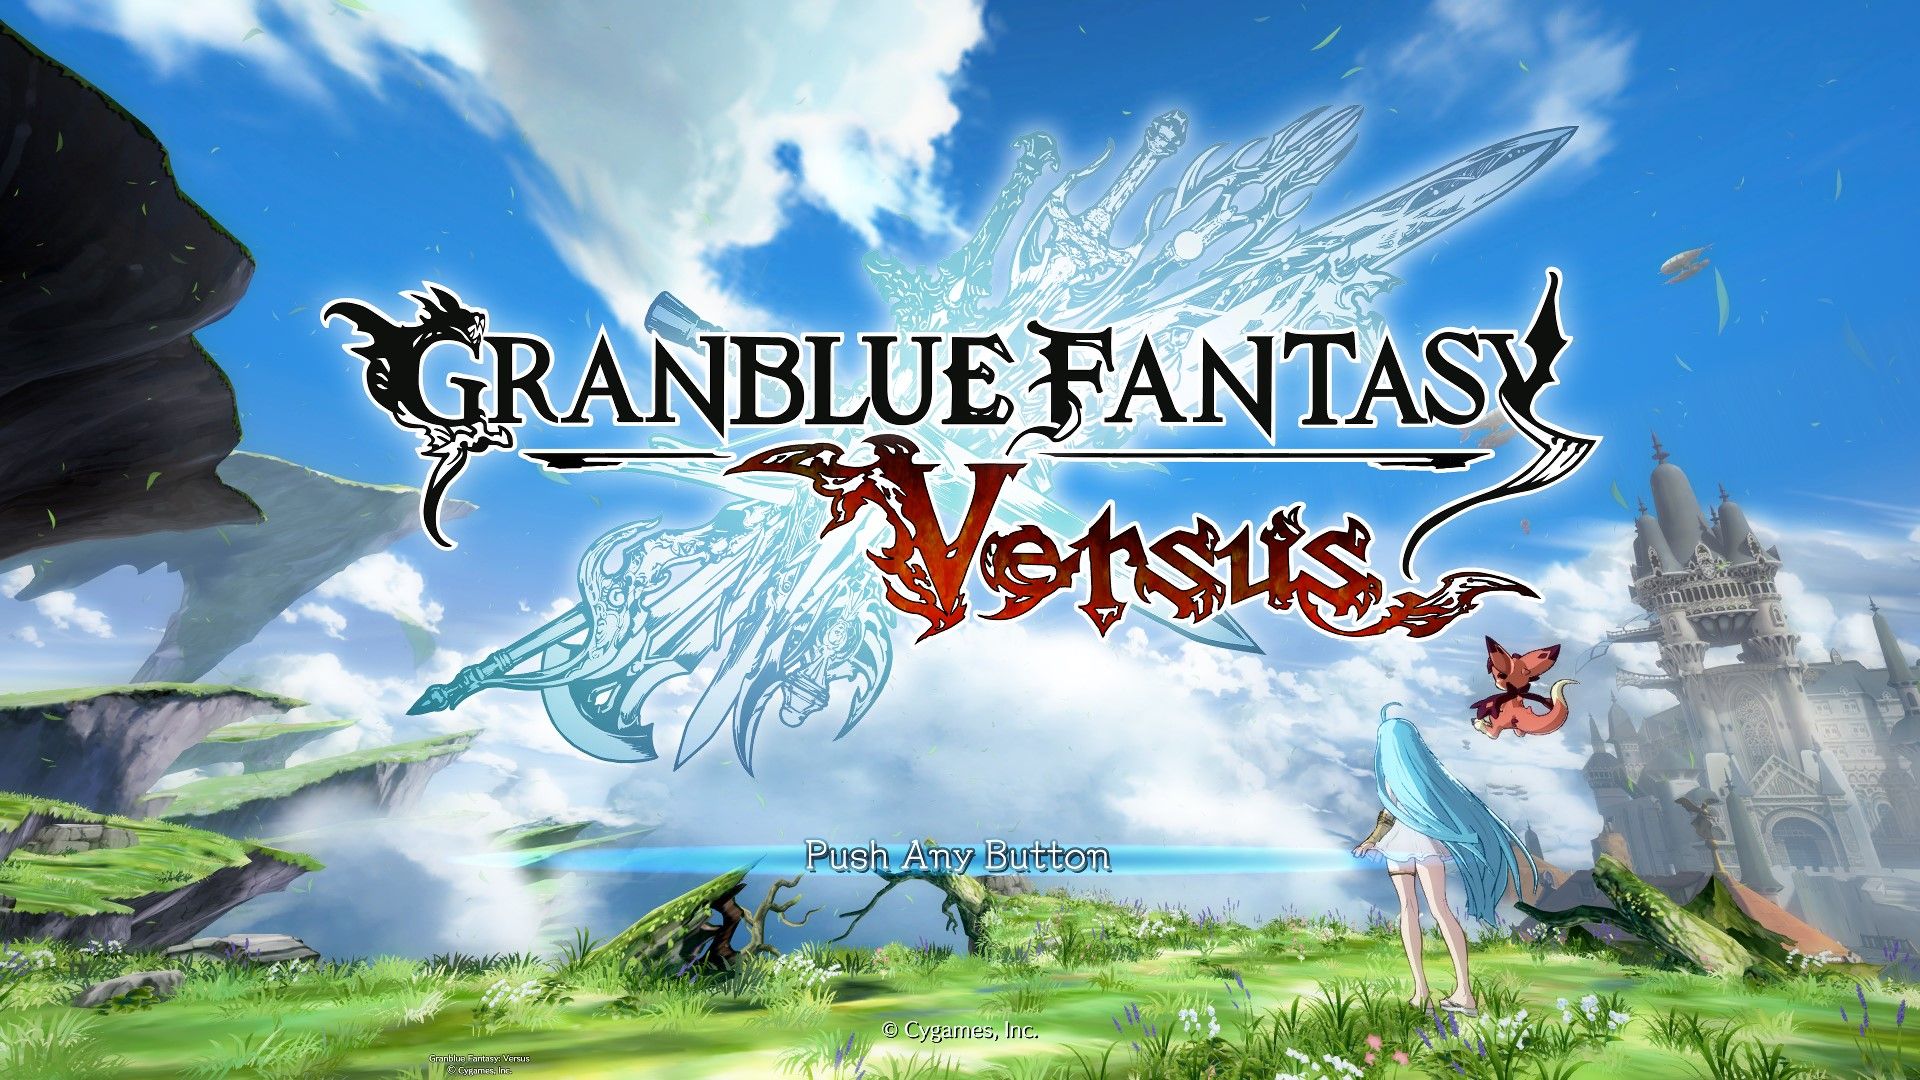 Granblue Fantasy Versus Video Game Wallpaper 69704 1920x1080px